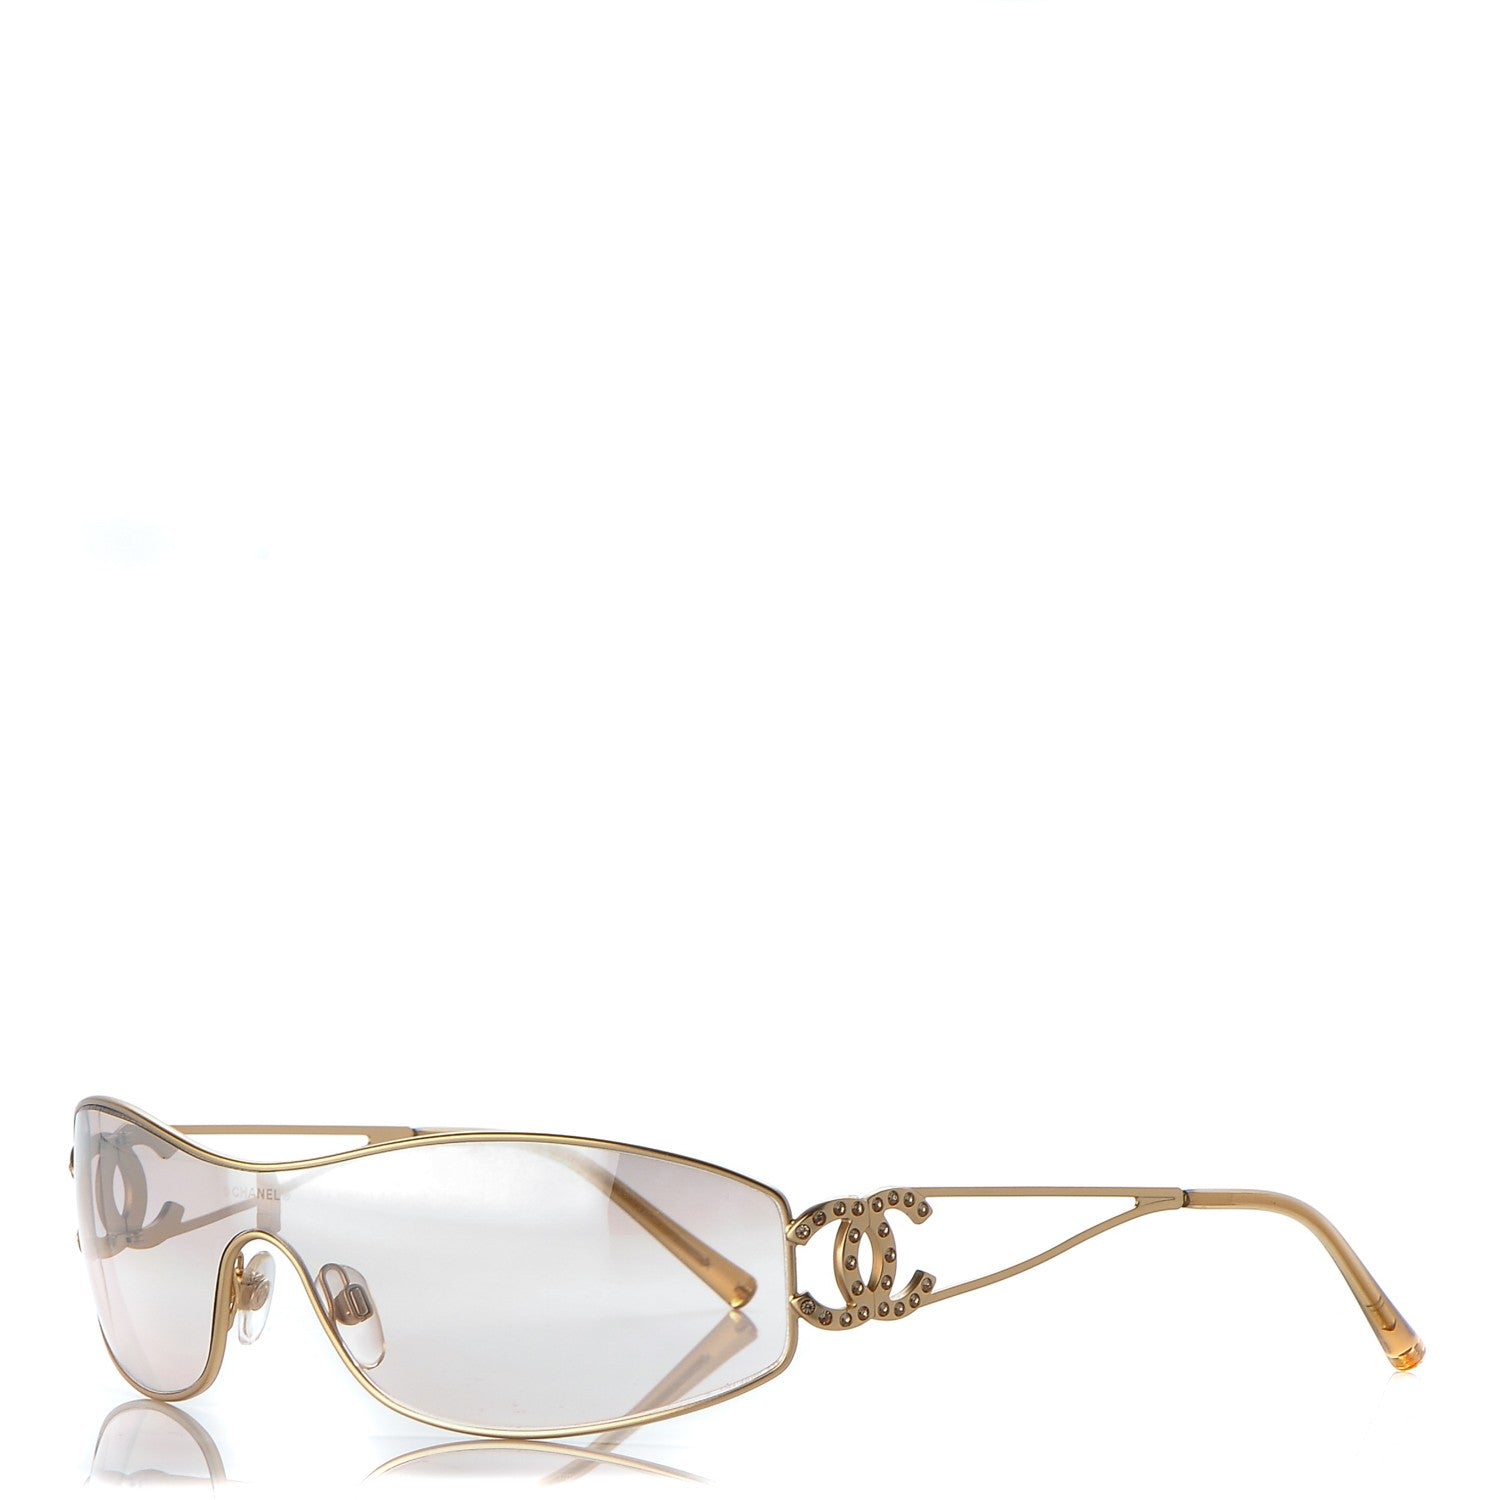 Chanel sunglasses With CC logo  eBay